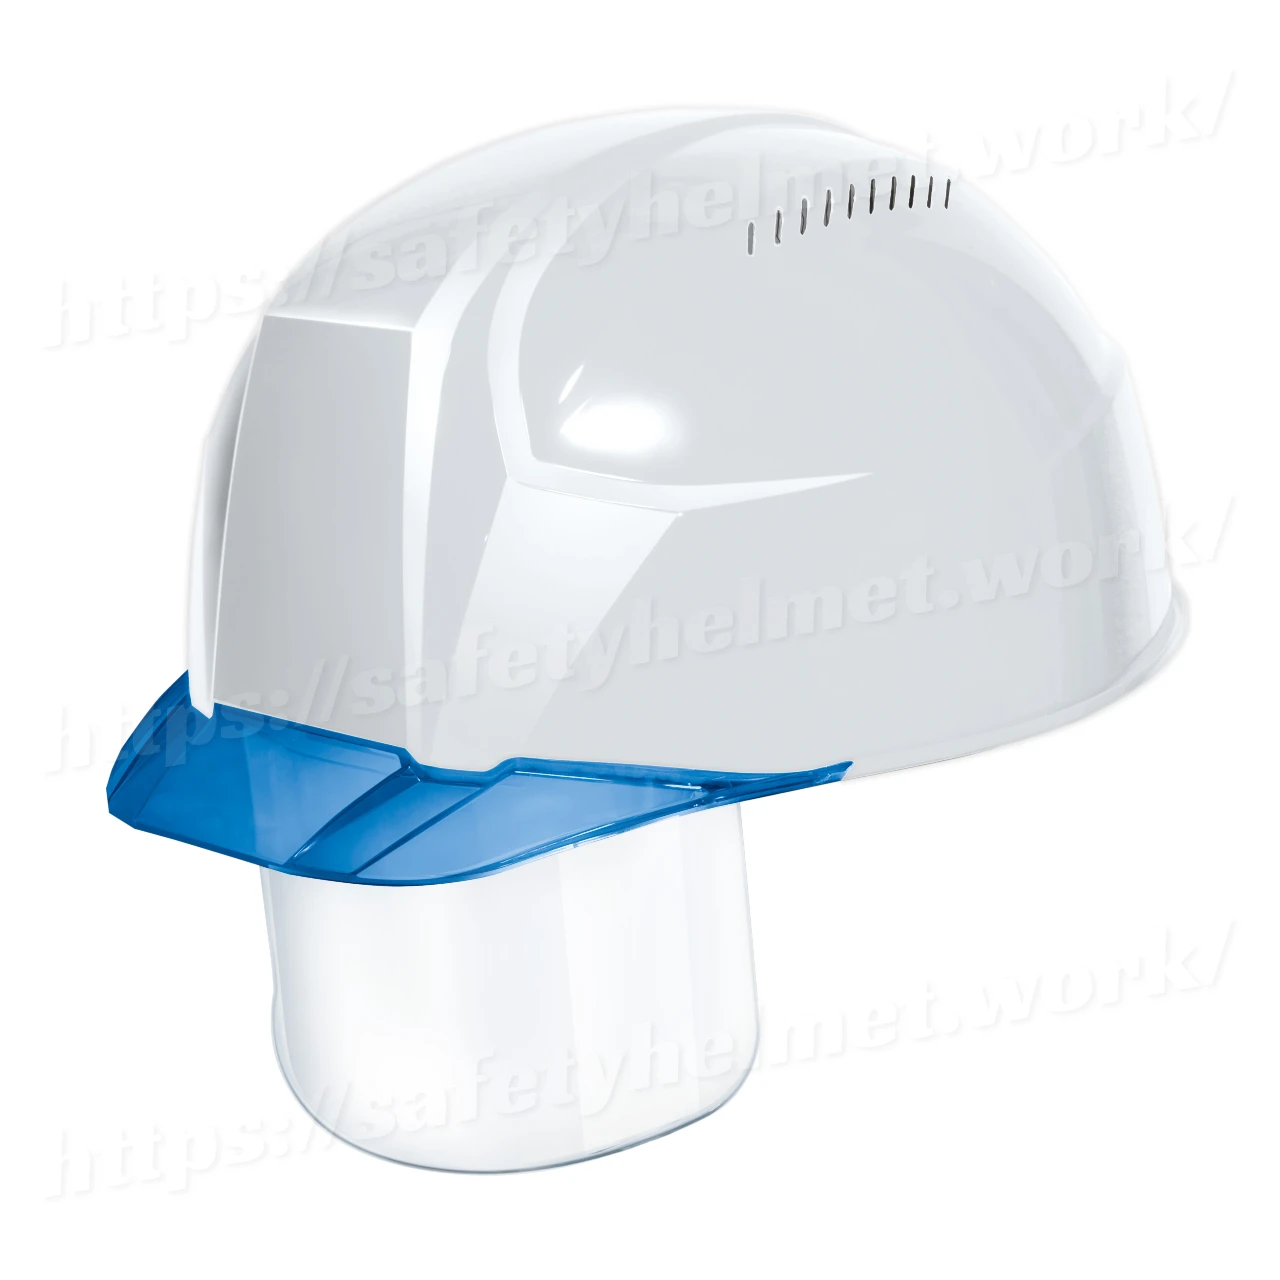 dic-lightest-helmet-keijin-shield-aa23csv-white-blue